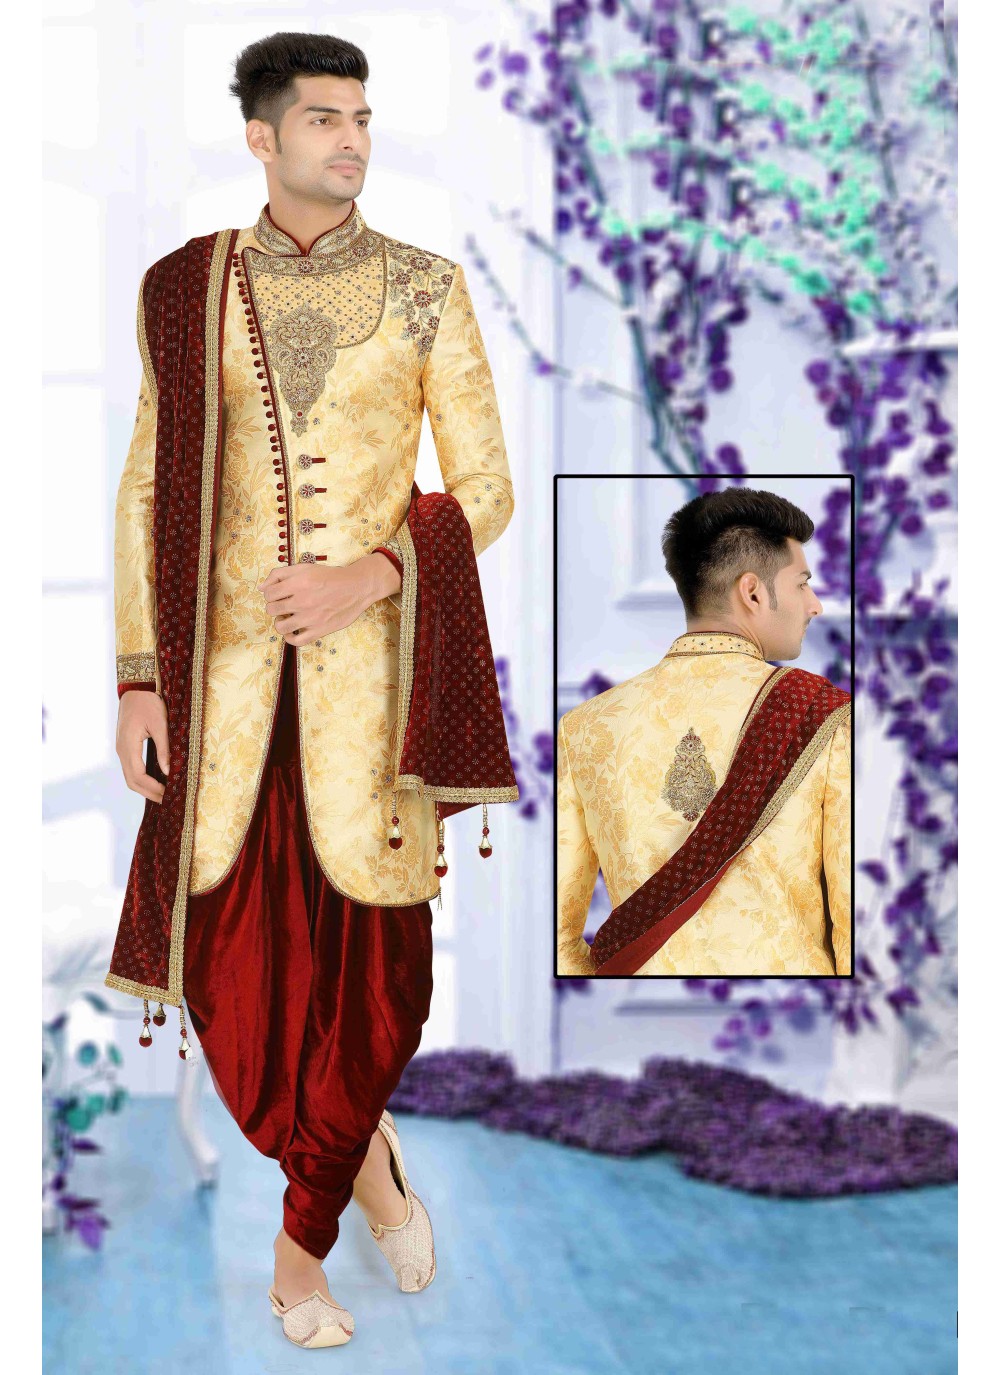 Buy Gold Art Dupion Silk Wedding Indo 